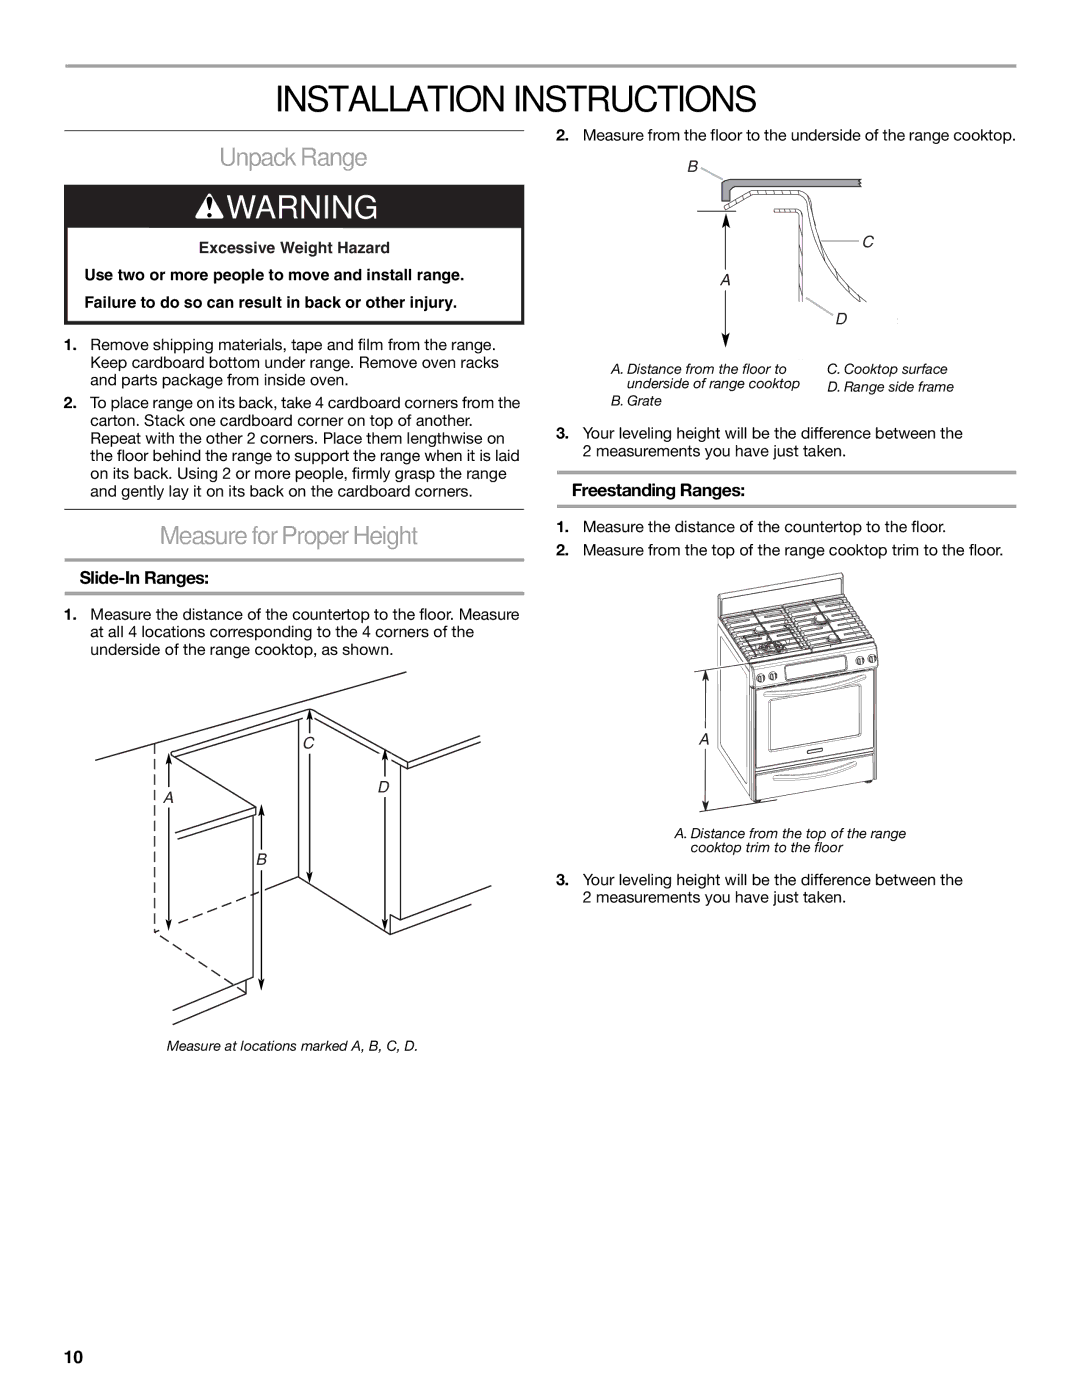 KitchenAid W10526089A Installation Instructions, Unpack Range, Measure for Proper Height, Slide-In Ranges 